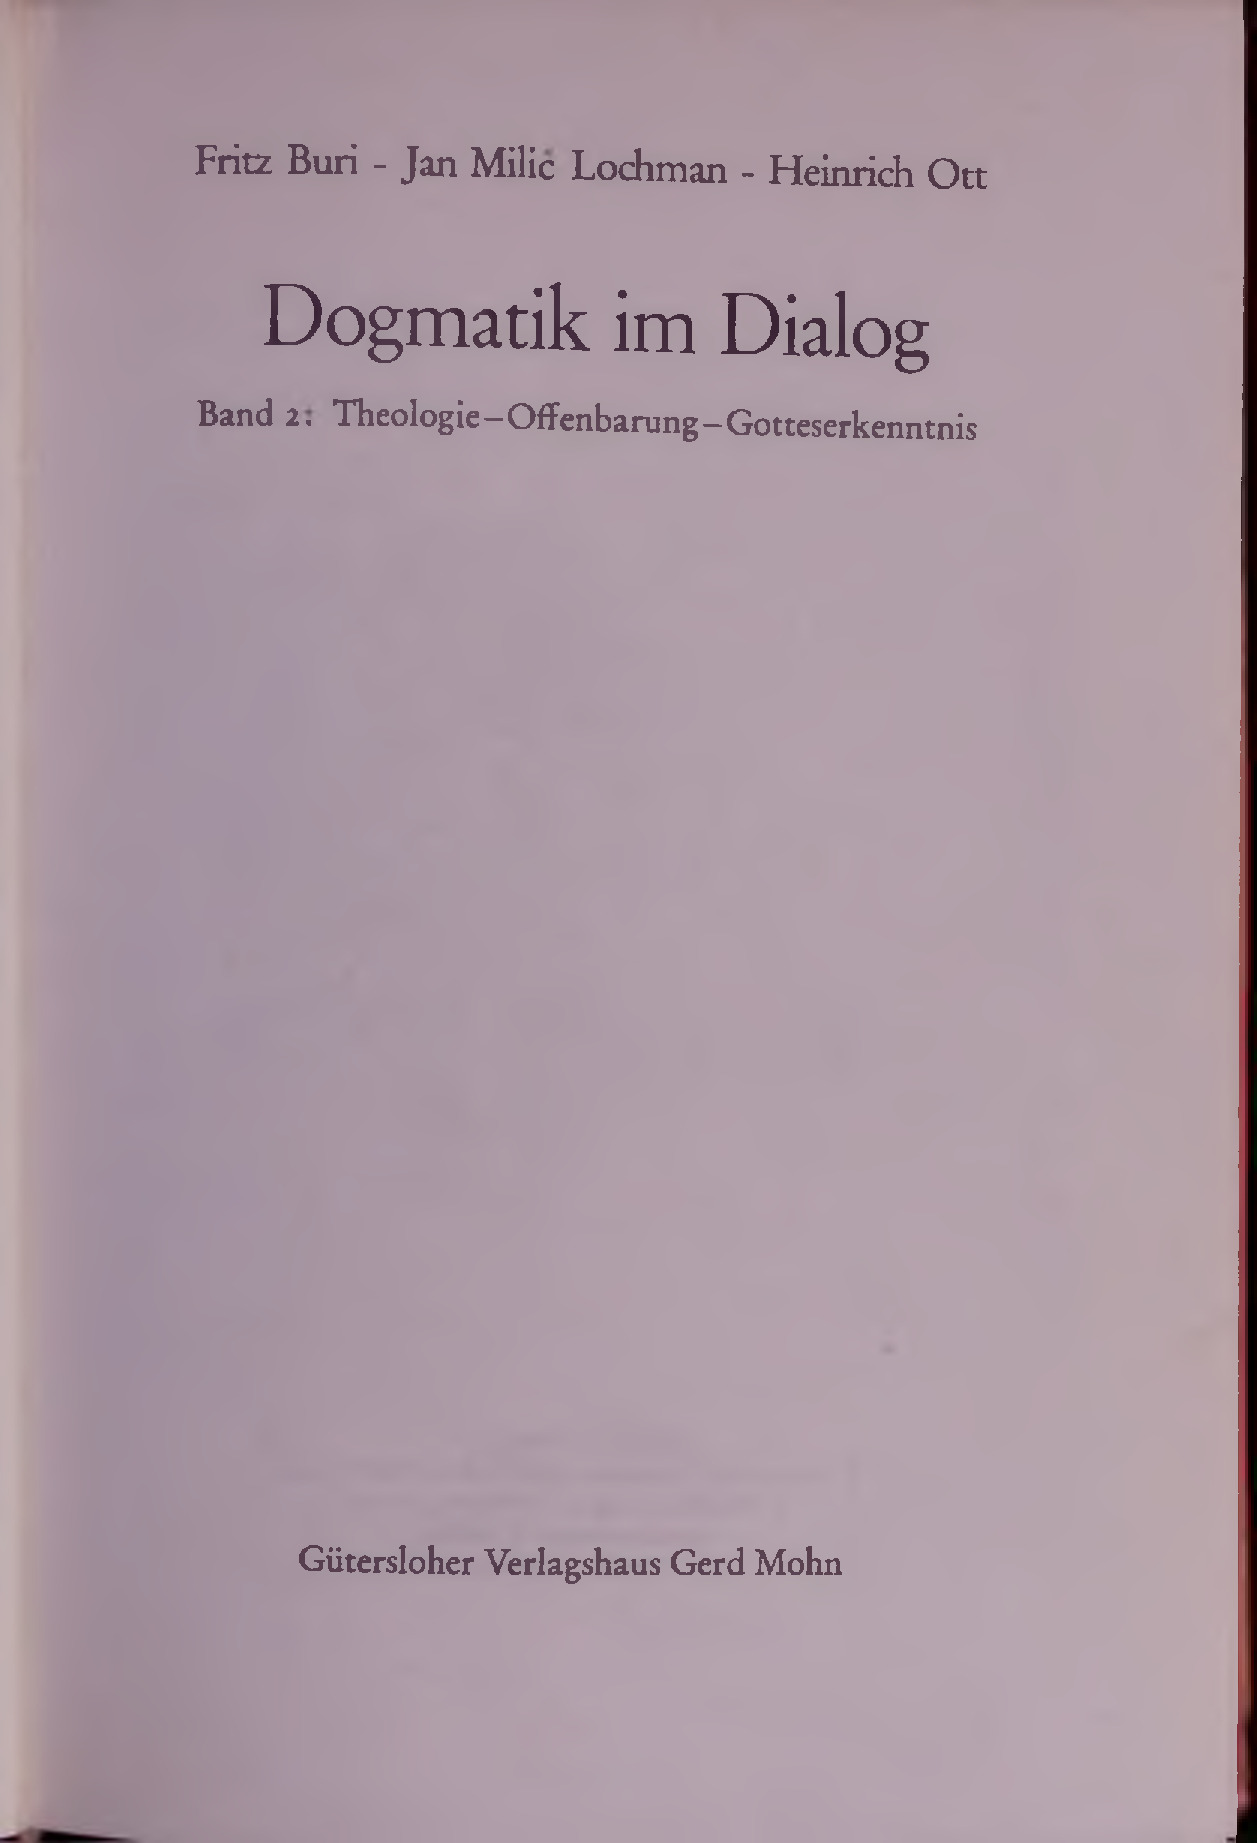 Dogmatik im Dialog. Band 1: Theologie—Offenbarung—Gotteserkenntnis - Buri, Fritz